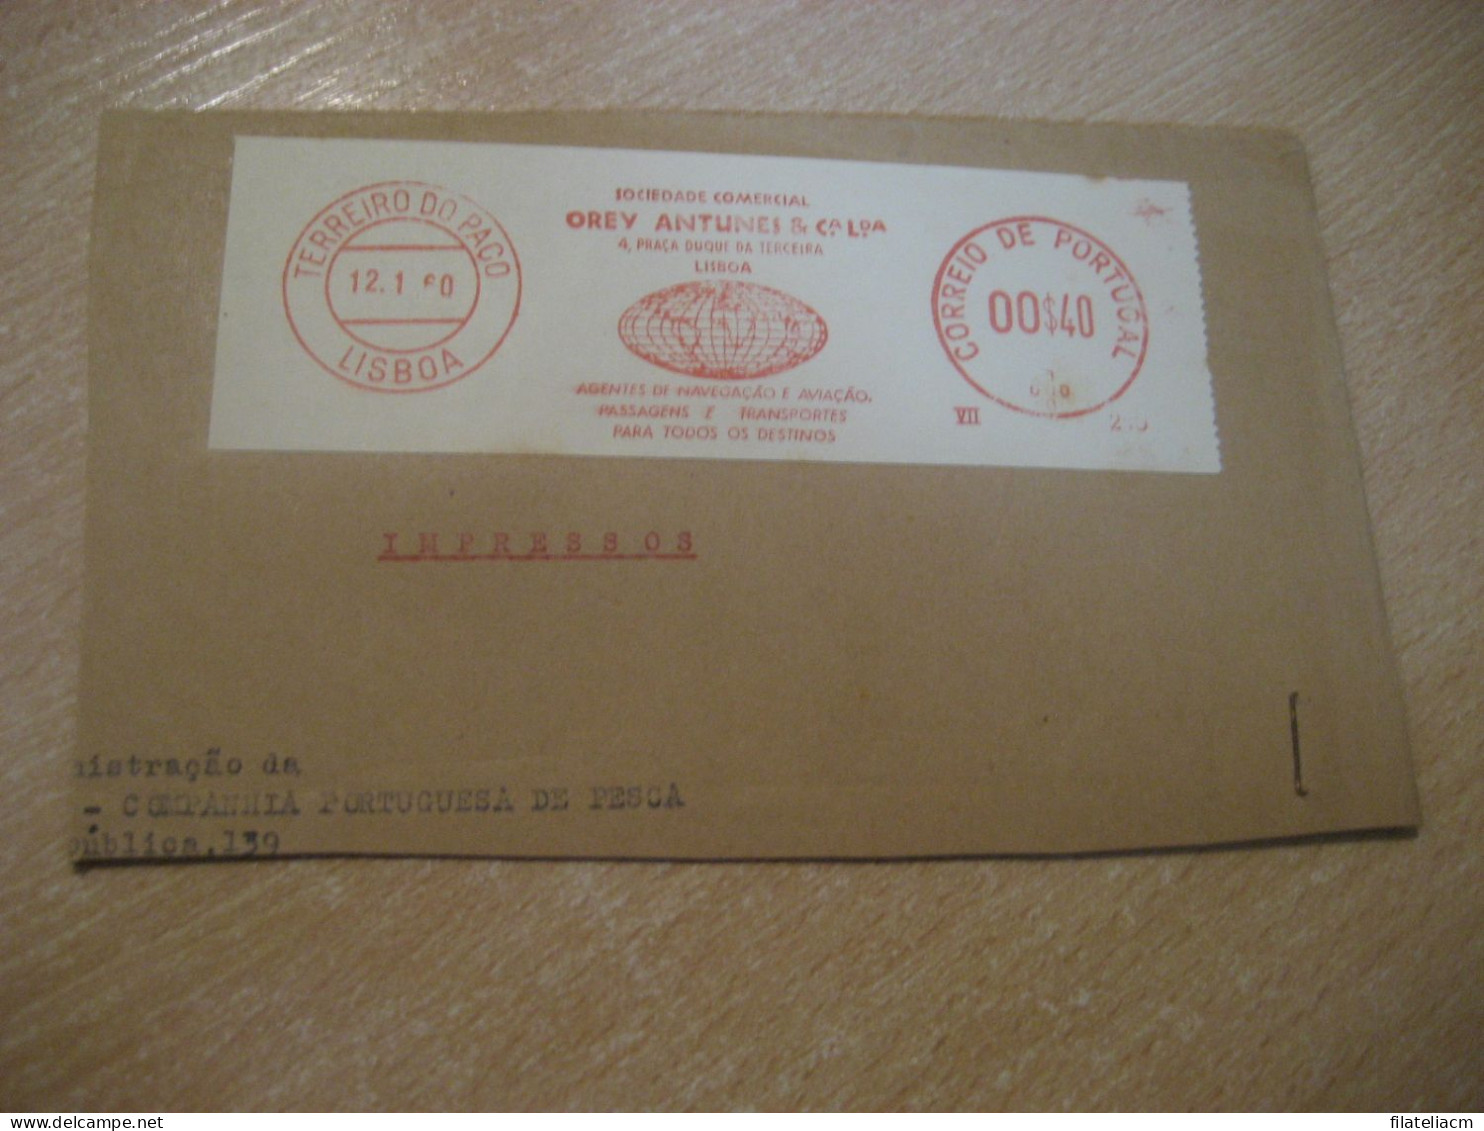 LISBOA 1960 Orey Antunes Agentes De Navegaçao E Aviaçao Meter Mail Cancel Cut Cuted Cover PORTUGAL - Storia Postale